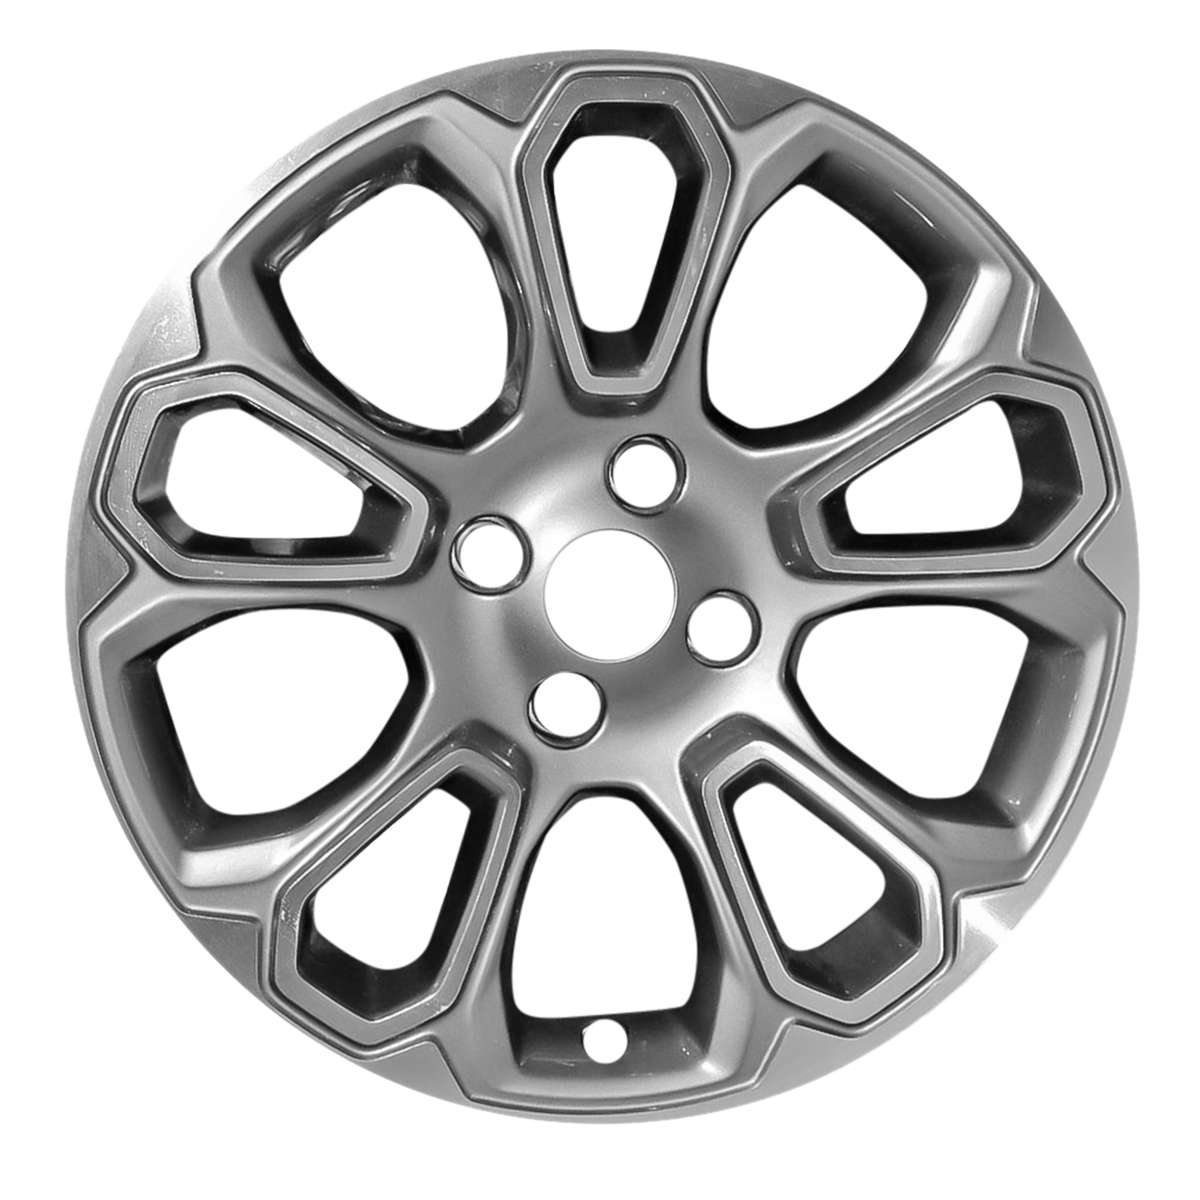 2021 Ford Ecosport 17" OEM Wheel Rim W10152S